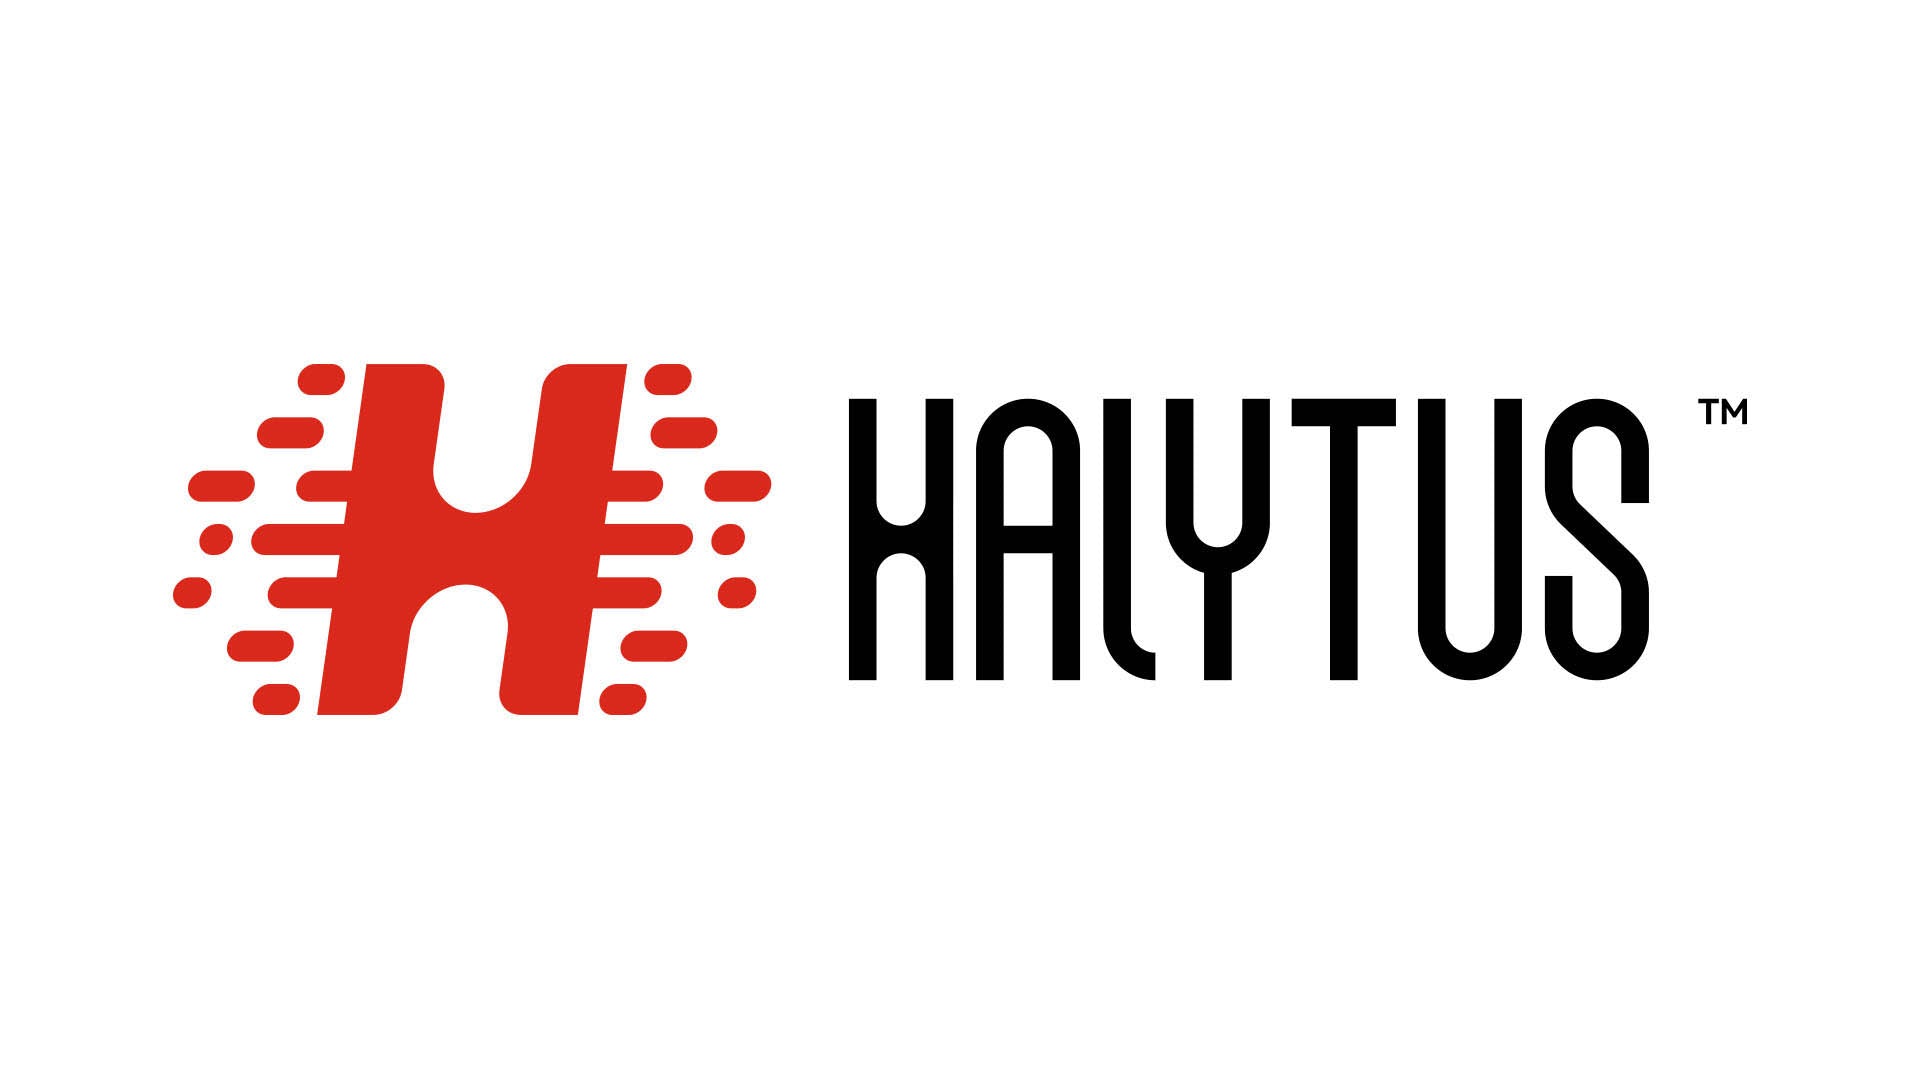 Halytus - logo-1080